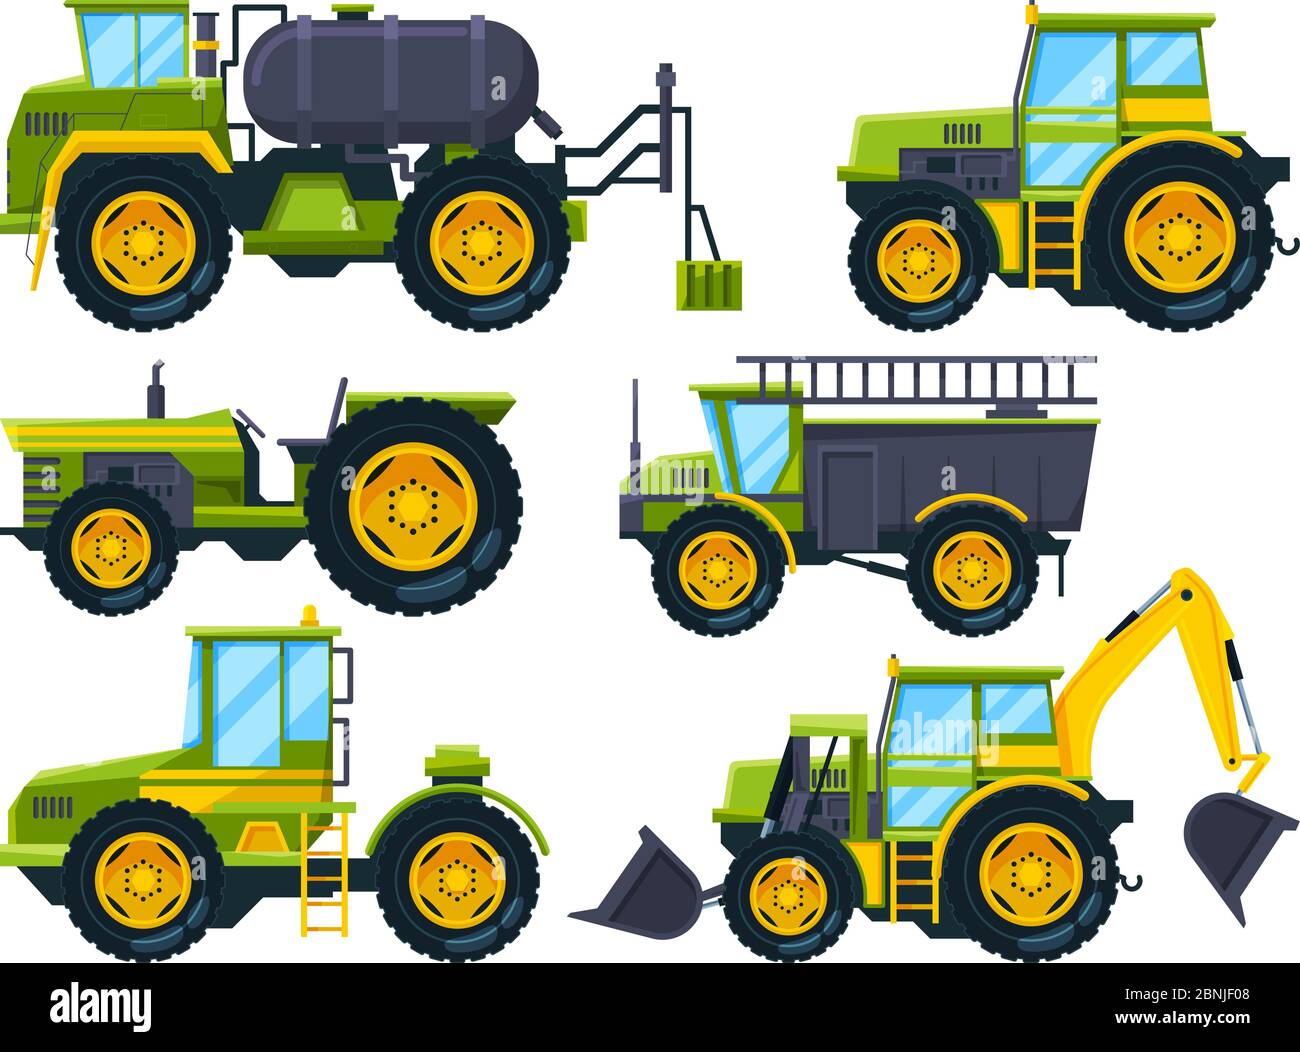 Landmaschinen. Farbige Bilder im Cartoon-Stil Stock Vektor